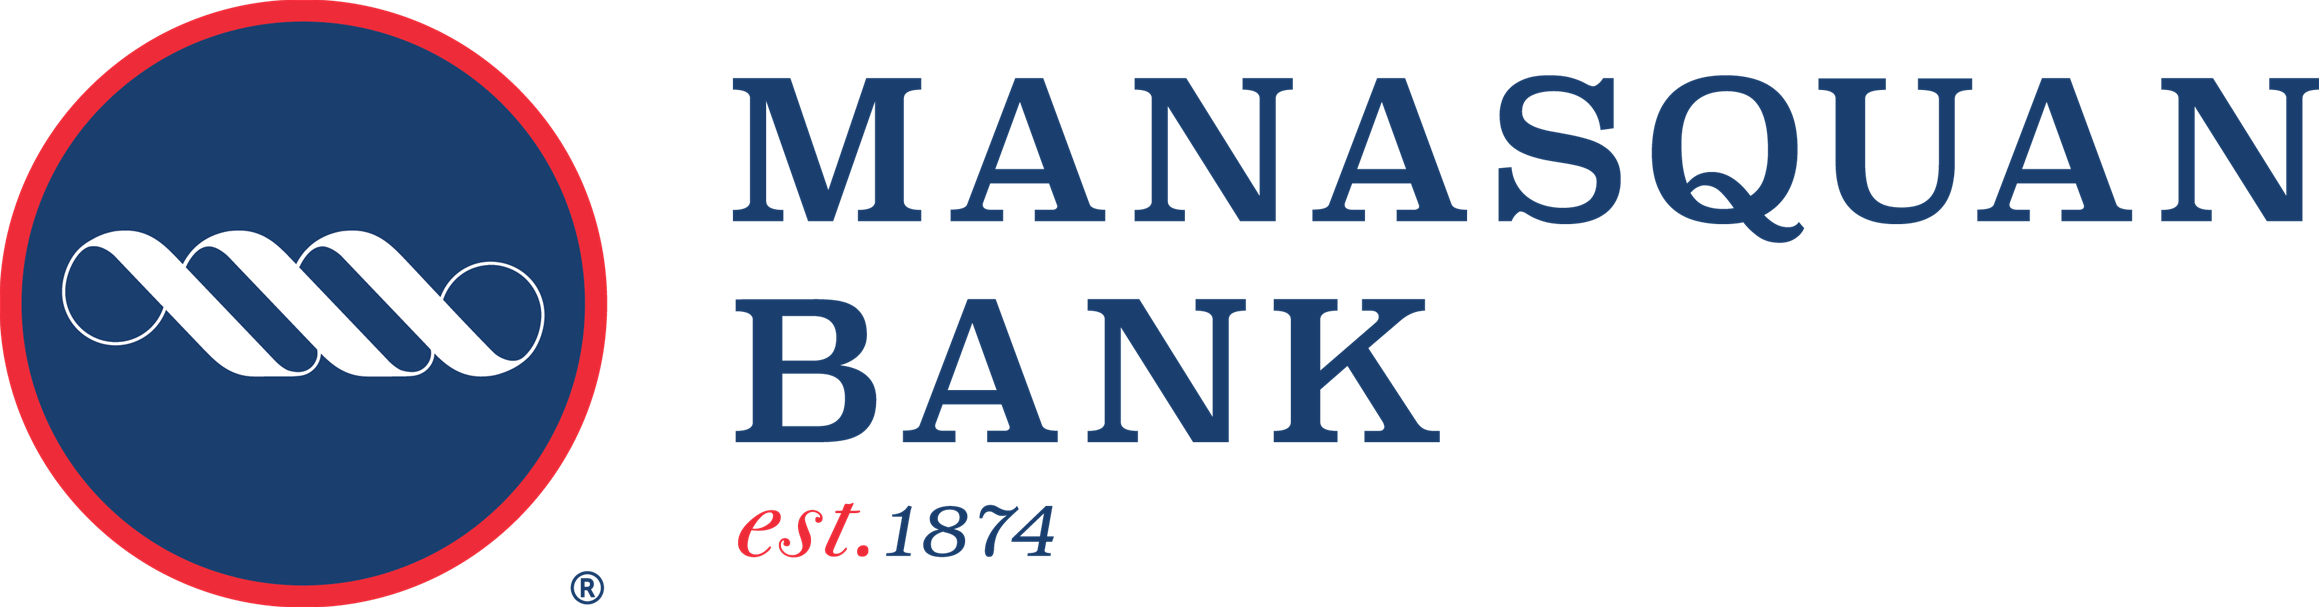 Manasquan Bank new